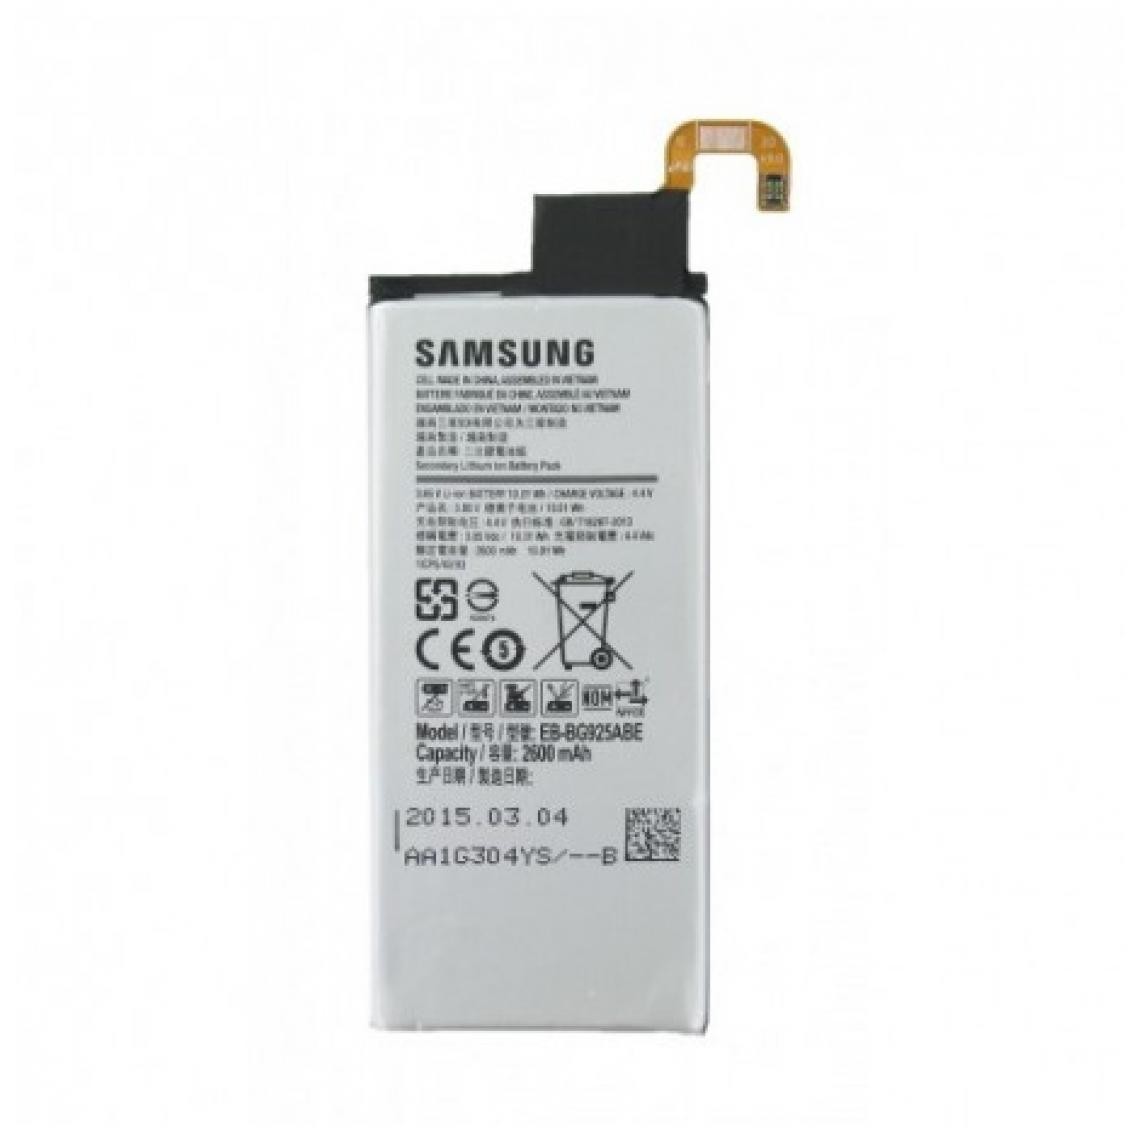 Samsung - BATTERIE ORIGINALE SAMSUNG GALAXY S6 EDGE - EB-BG925ABA 2600mAh - Batterie téléphone